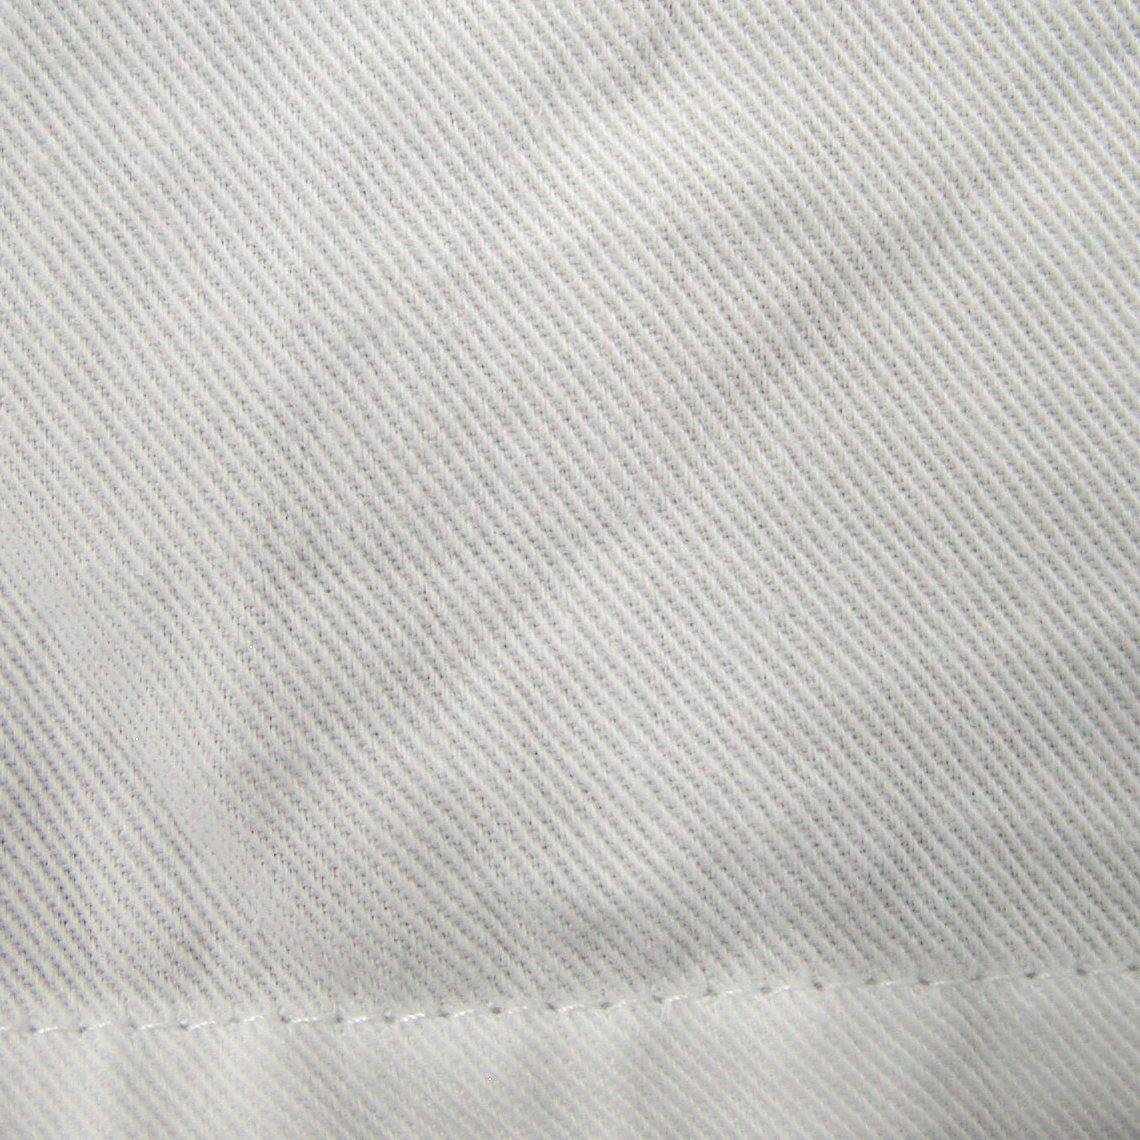 Choice White Cotton - A&A Wiping Cloth